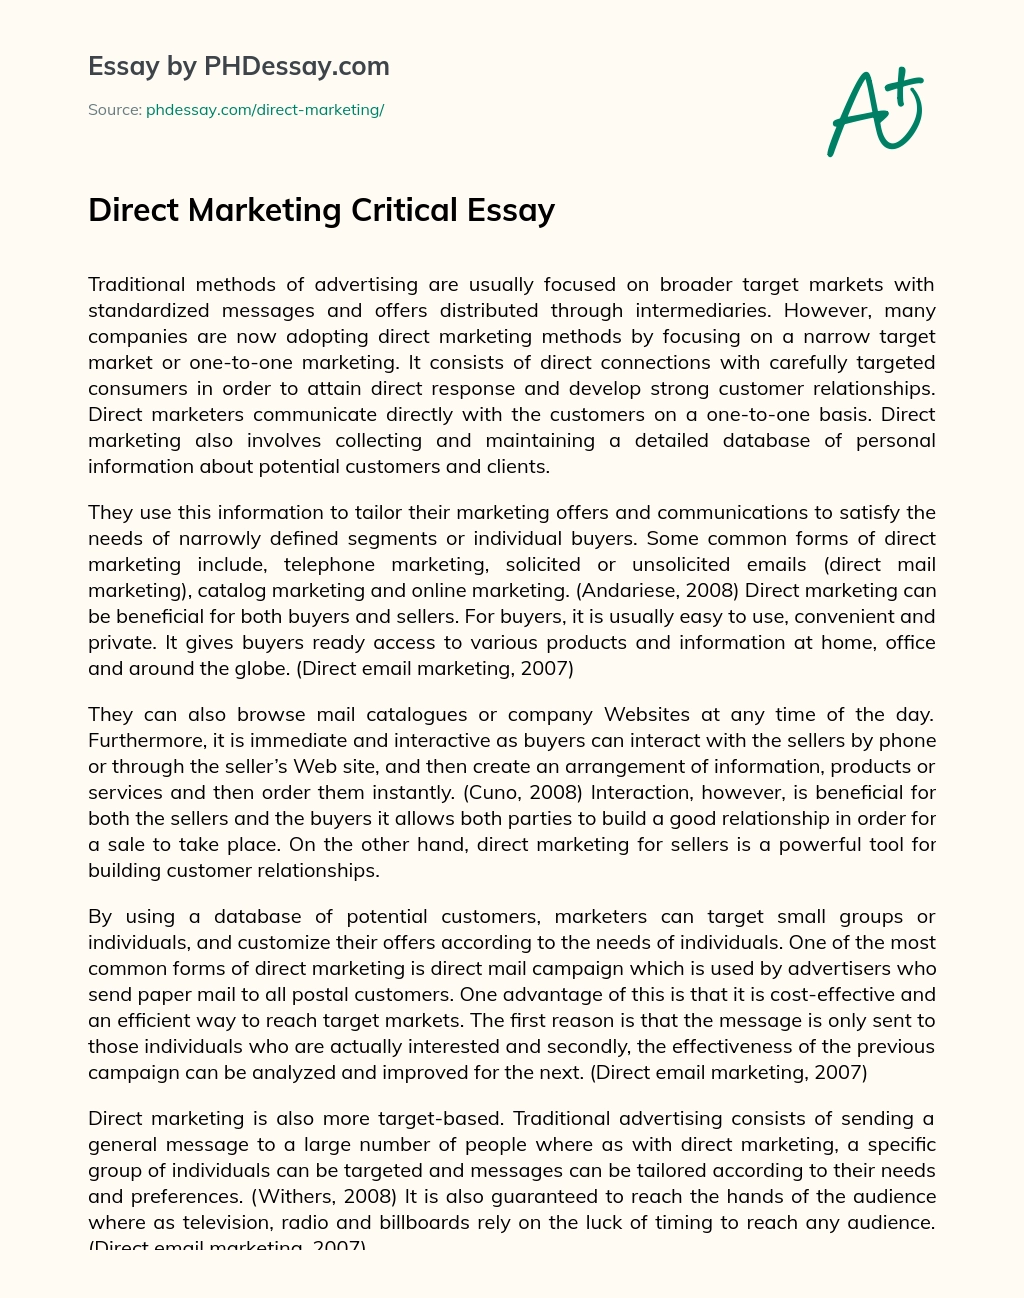 Direct Marketing Critical Essay essay